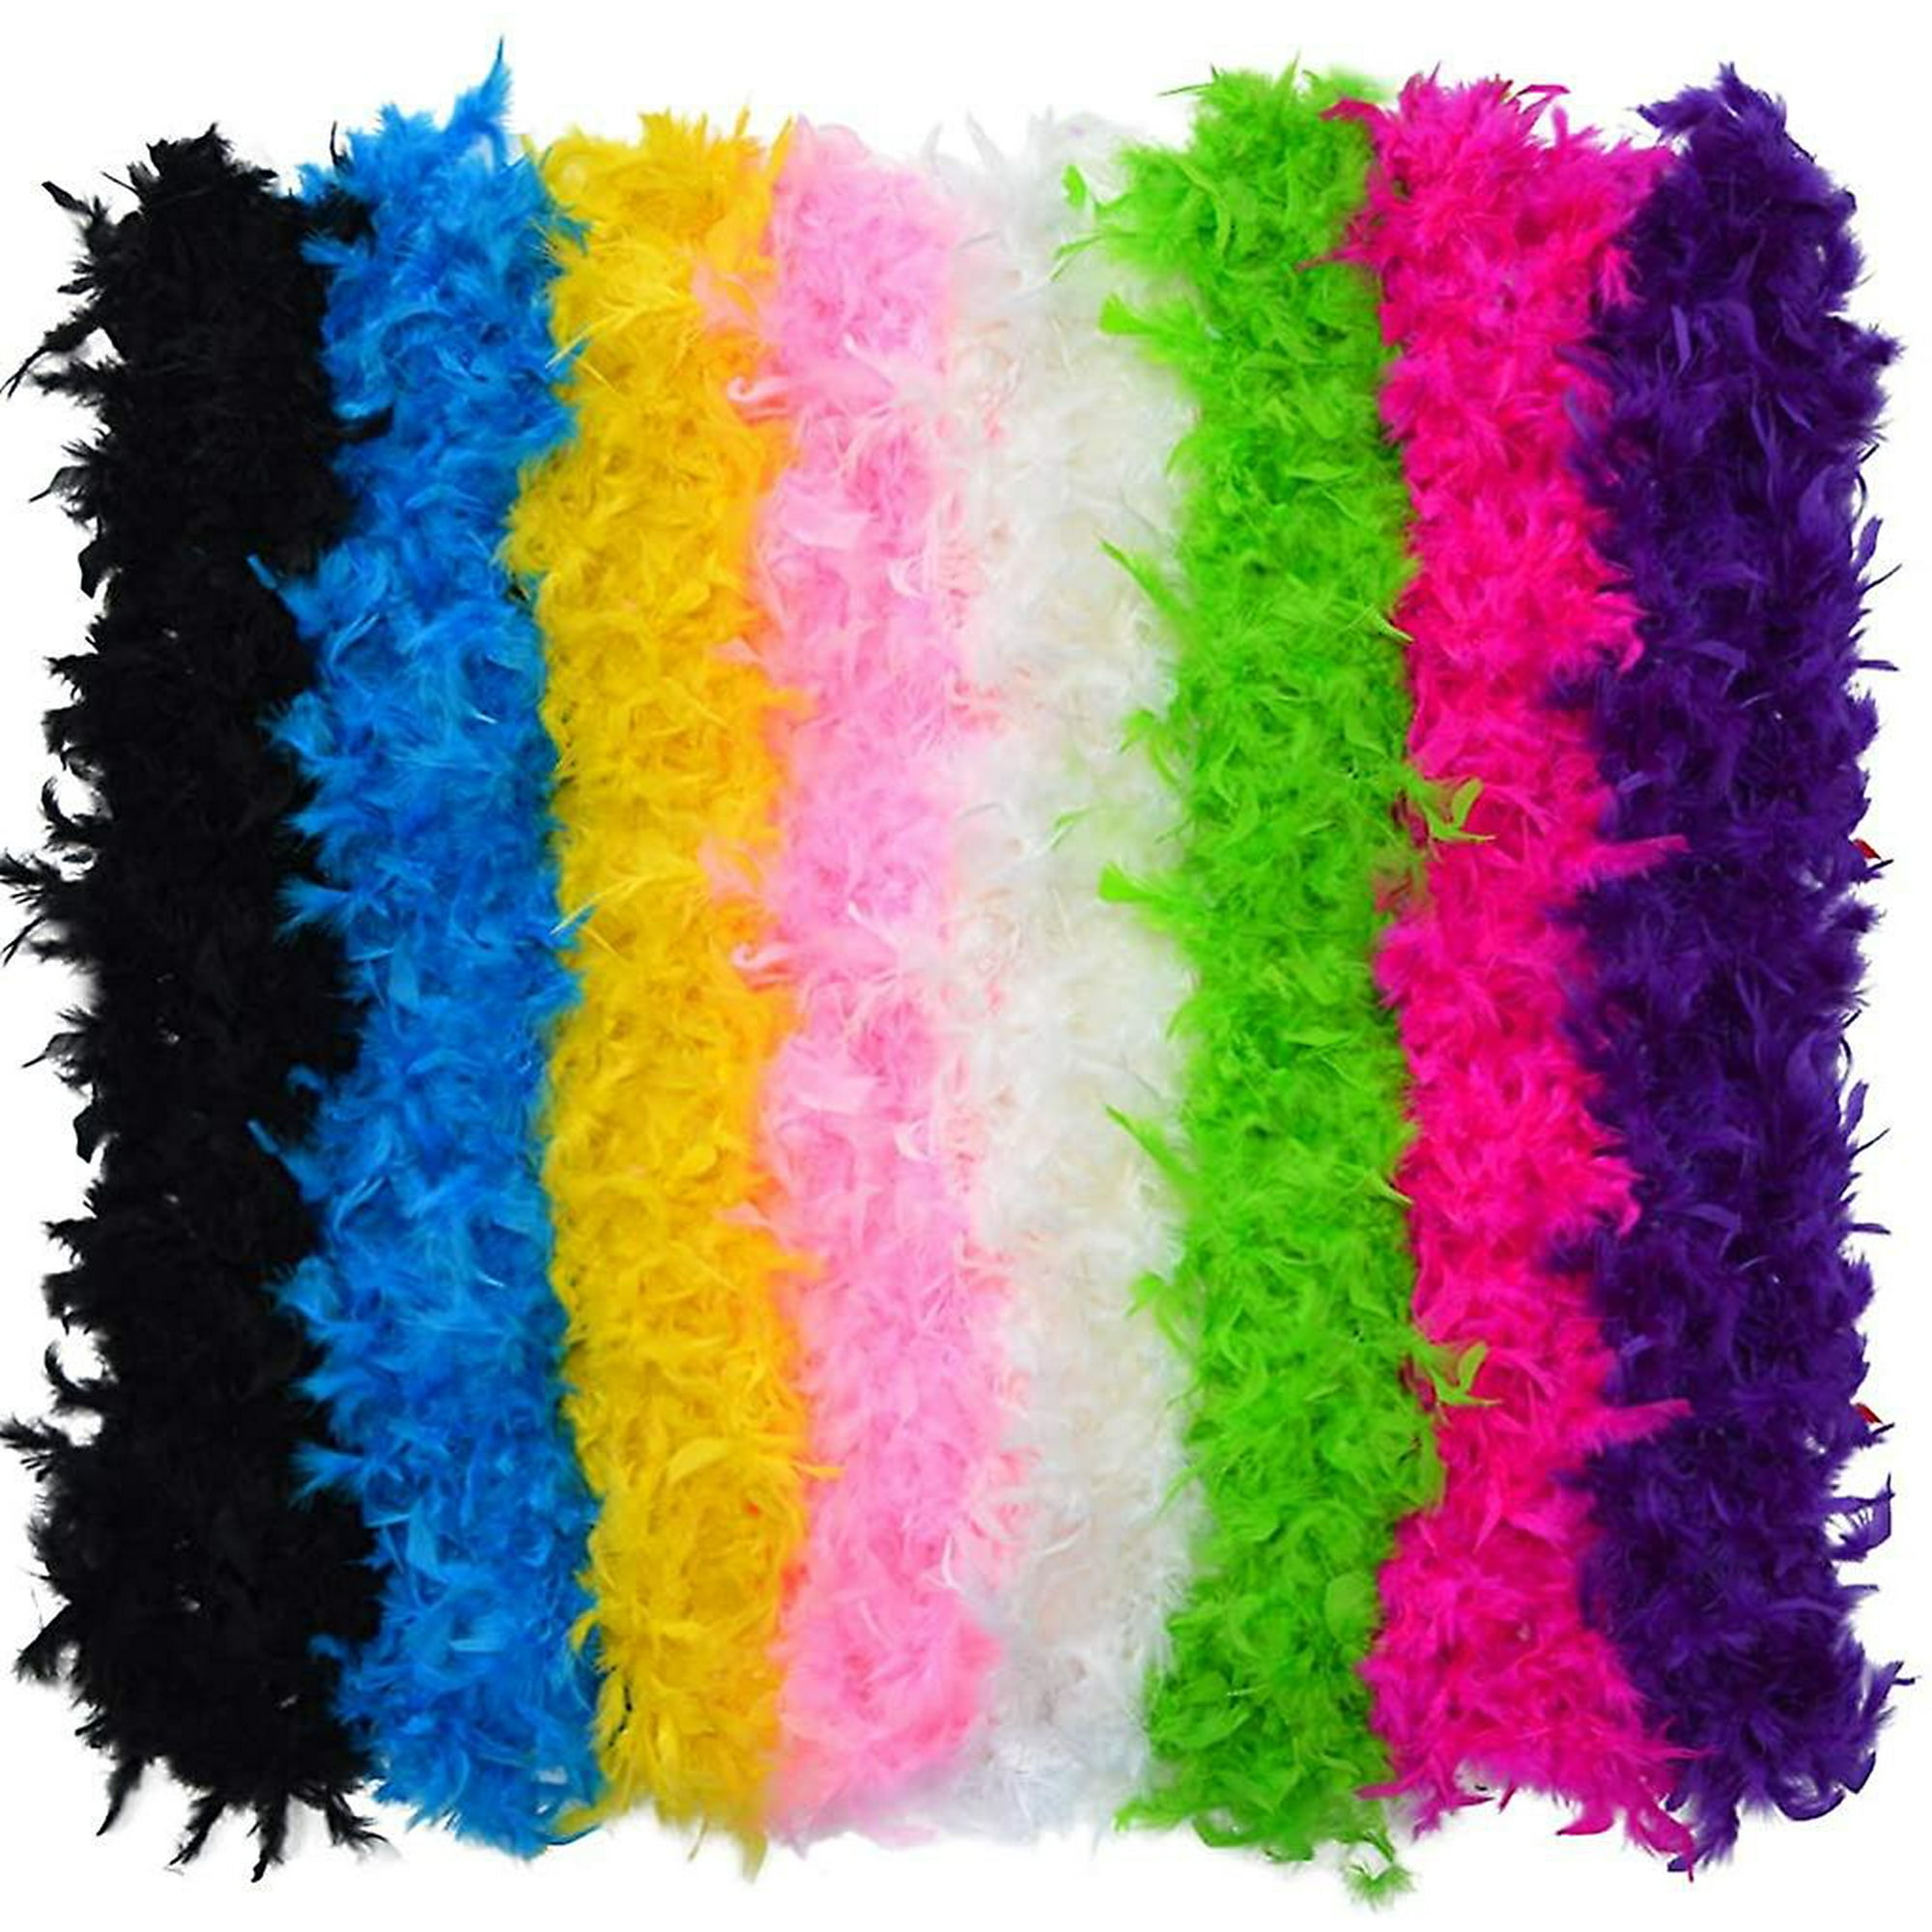 4E's Novelty Paquete de 2 boas de plumas de Mardi Gras de 6 pies / 72  pulgadas de largo, plumas esponjosas exuberantes en colores de Mardi Gras,  gran